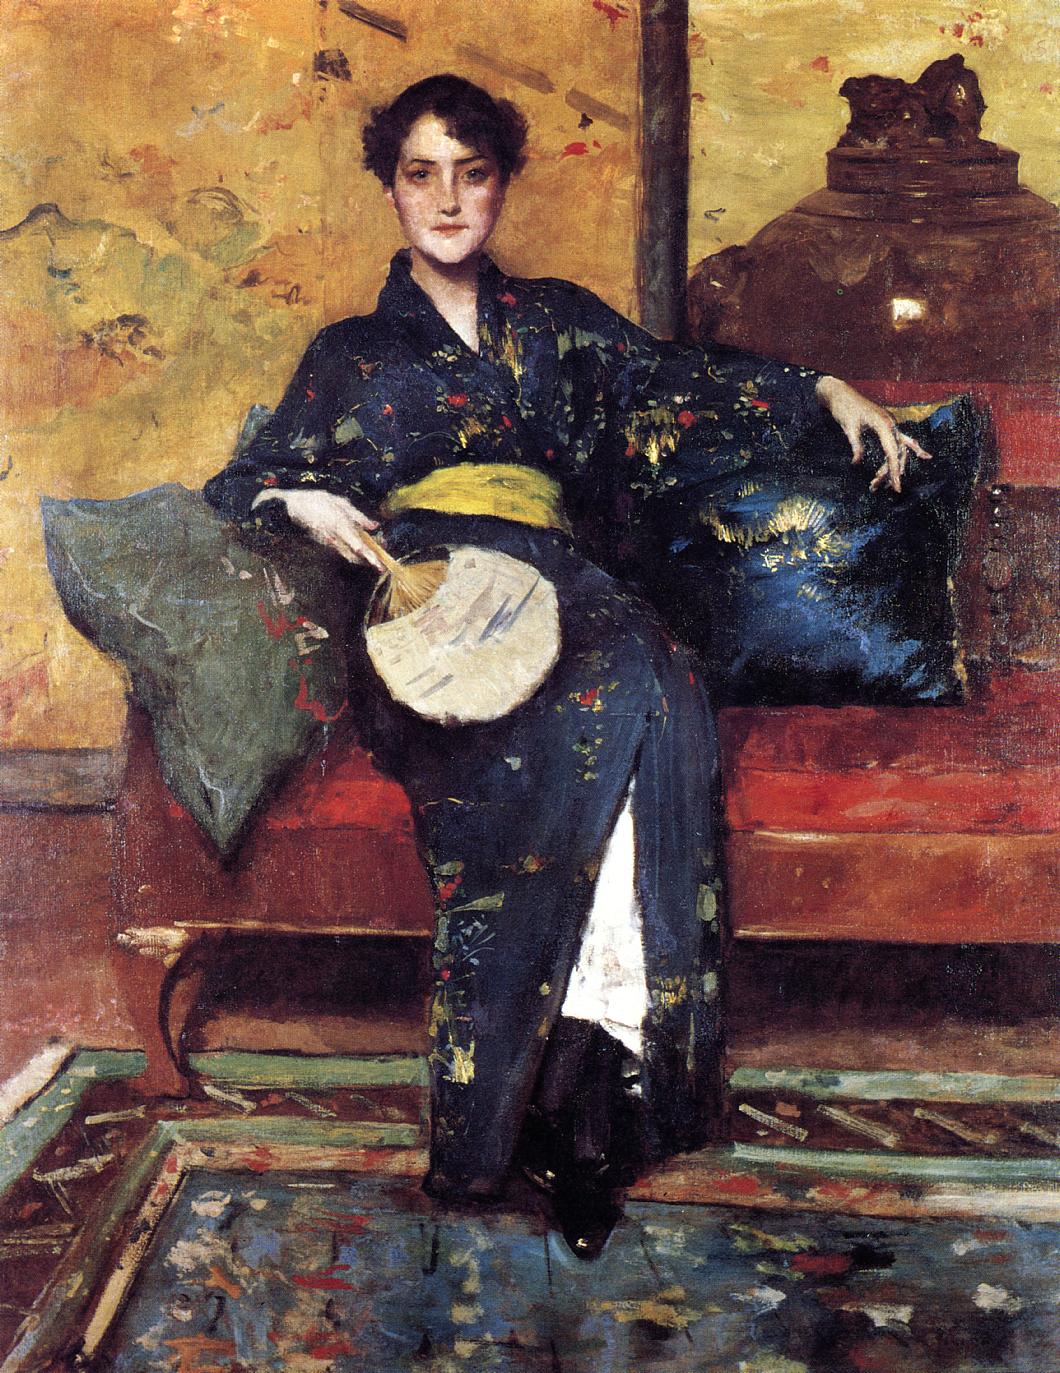 The Blue Kimono by William Merritt Chase, 1898